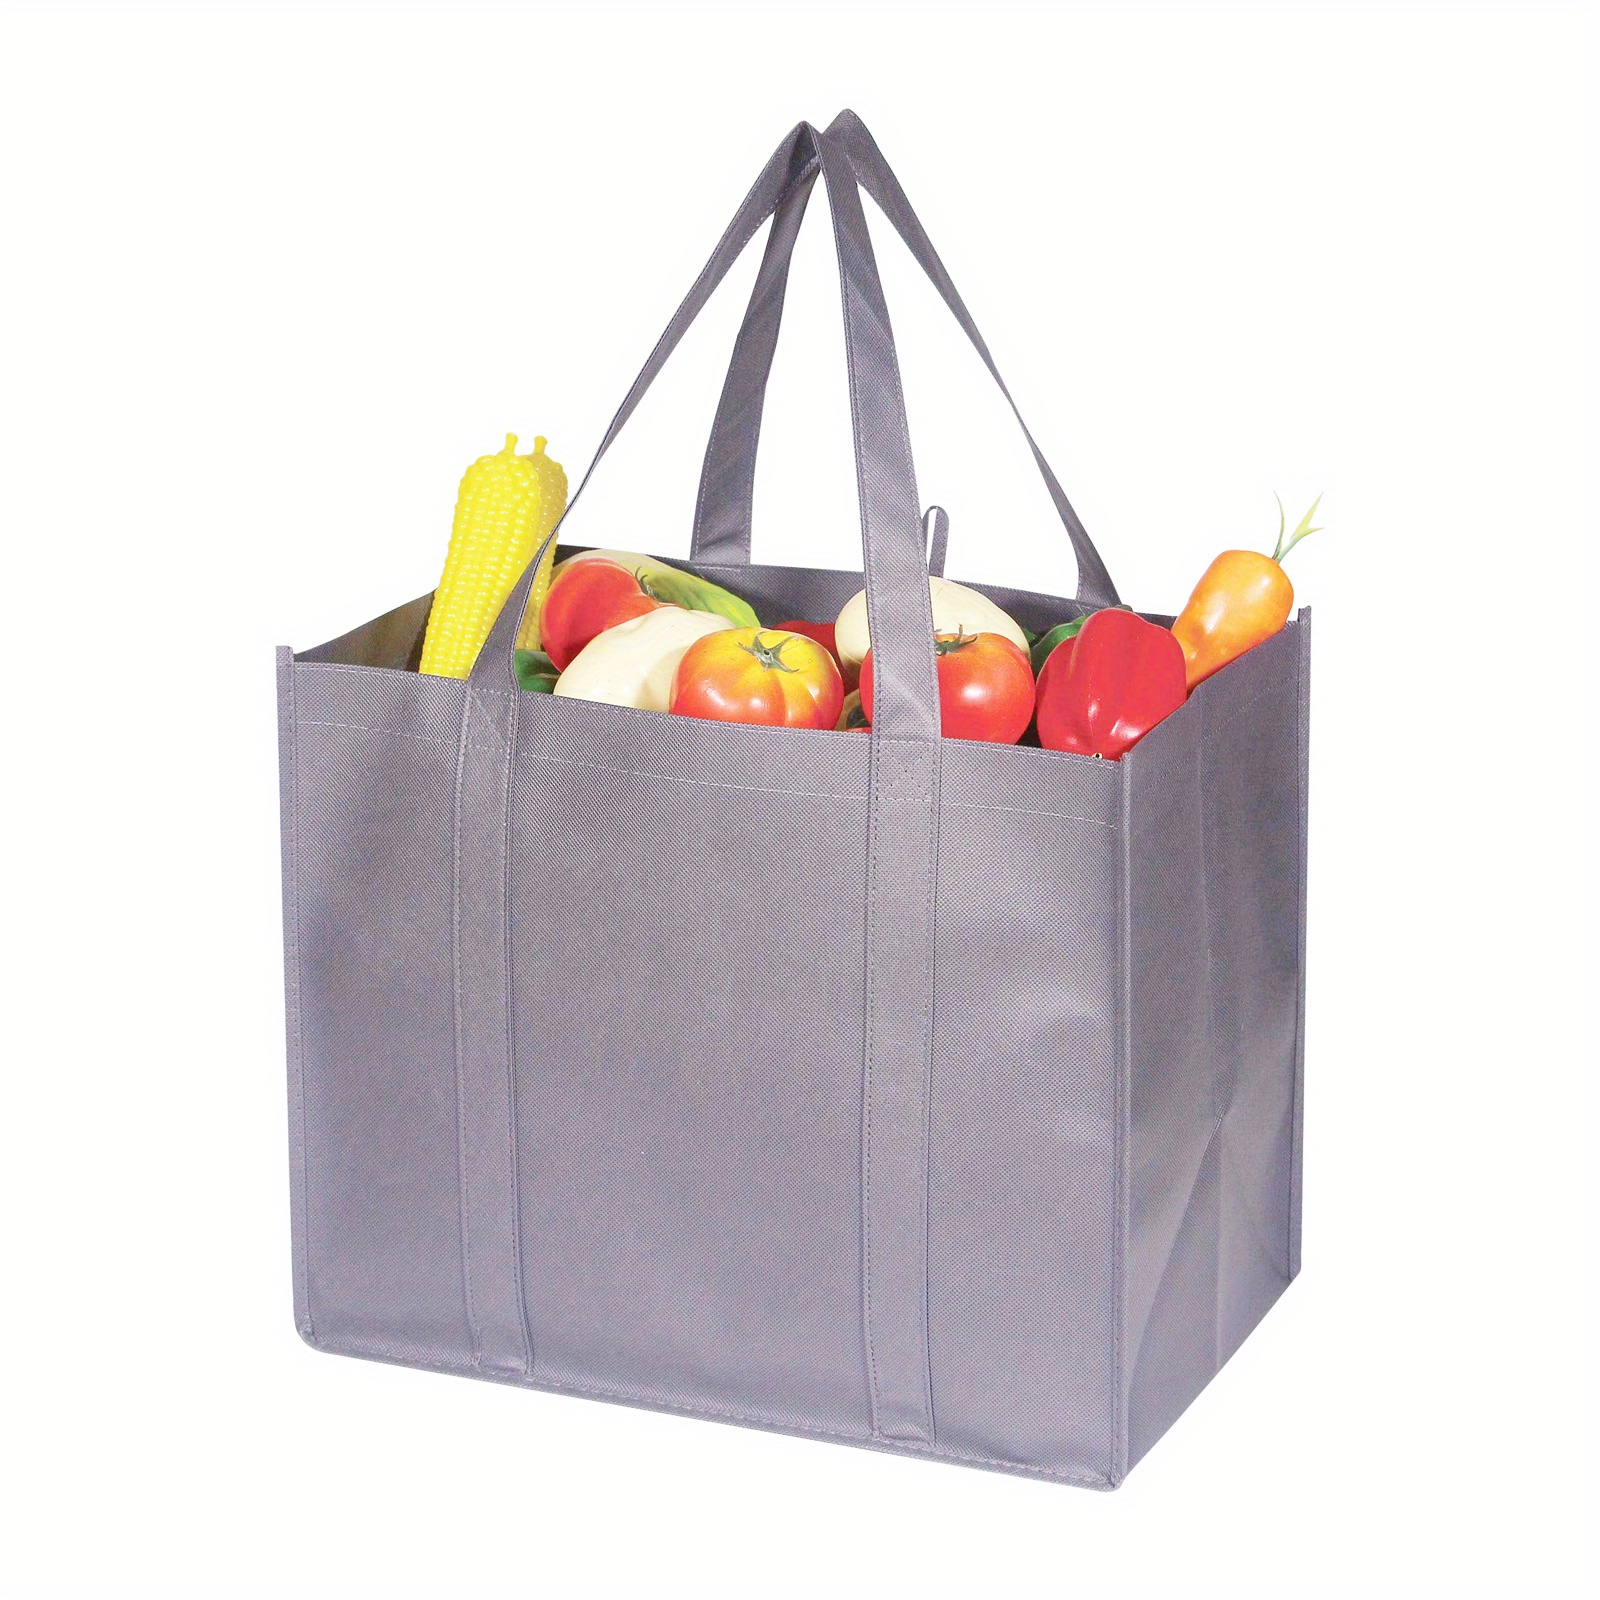 Gatuida 120 Pcs Gift Bag Purse Bags for Storage Clothes Bags for Storage  Inc Fresh Food Storage Bags Handles for Food Transportation Tote Bags Paper